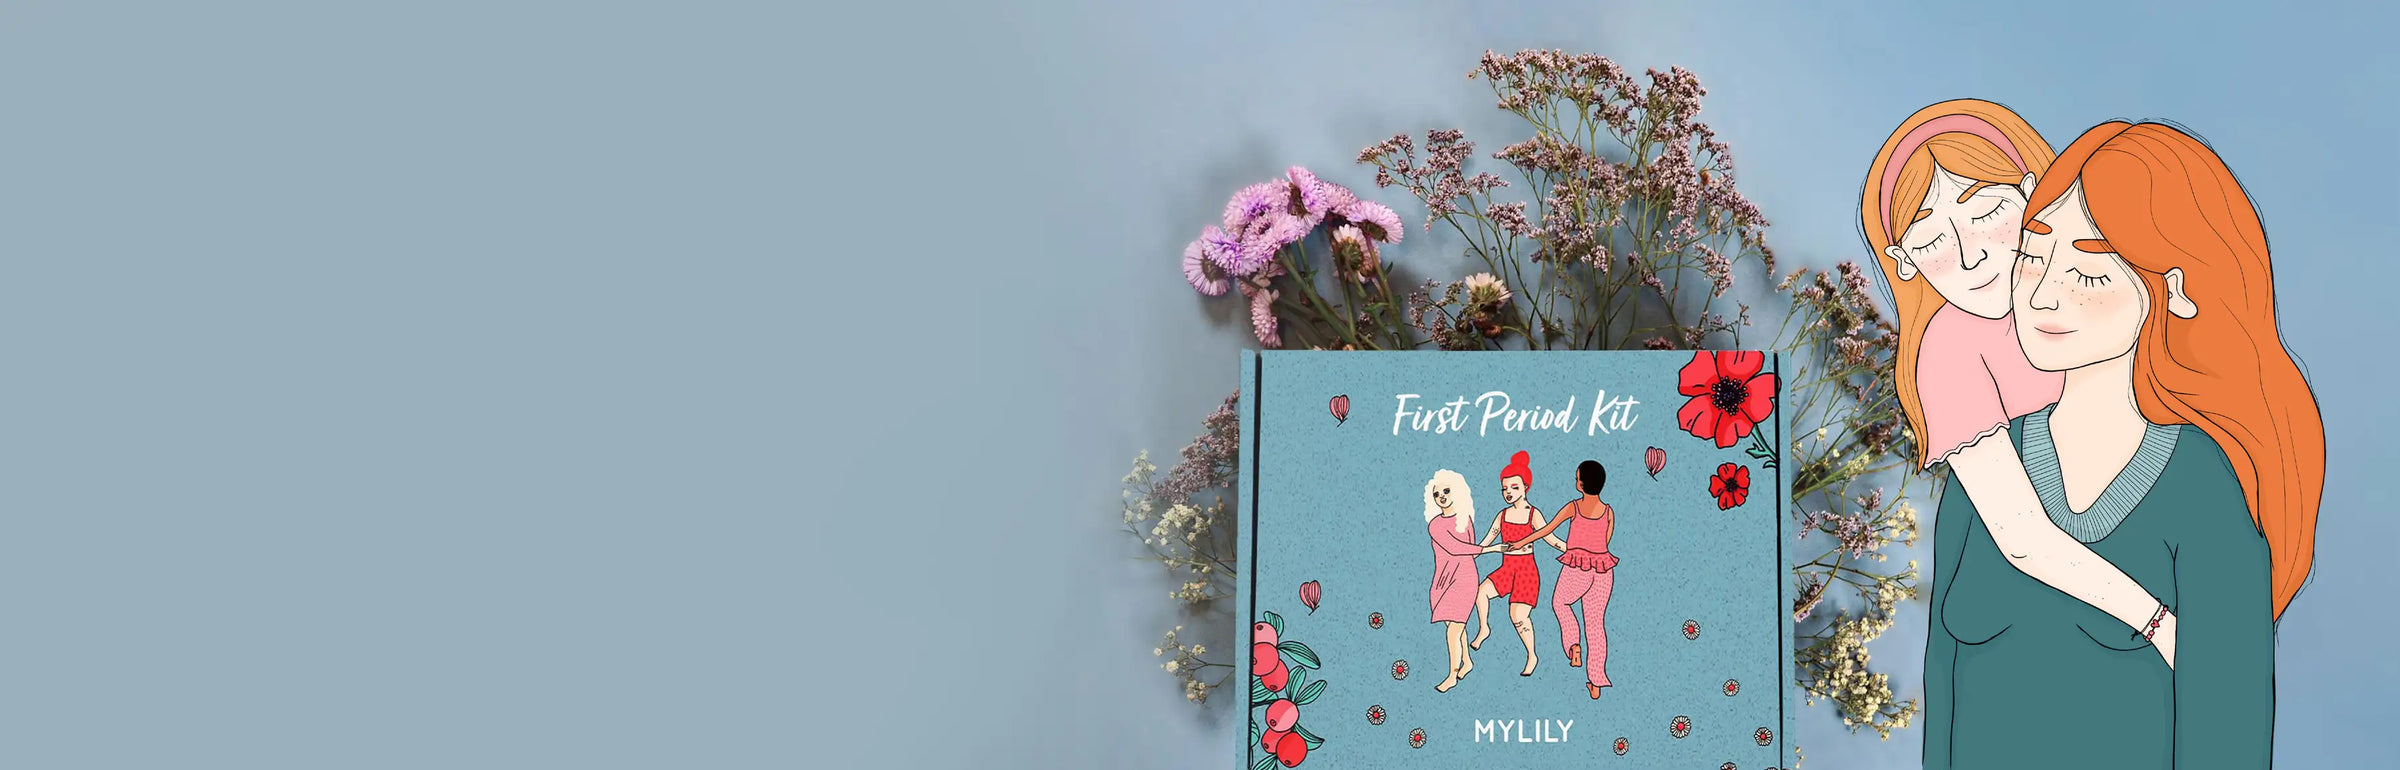 MYLILY First Period Kit, erste Periode Set für Teenager